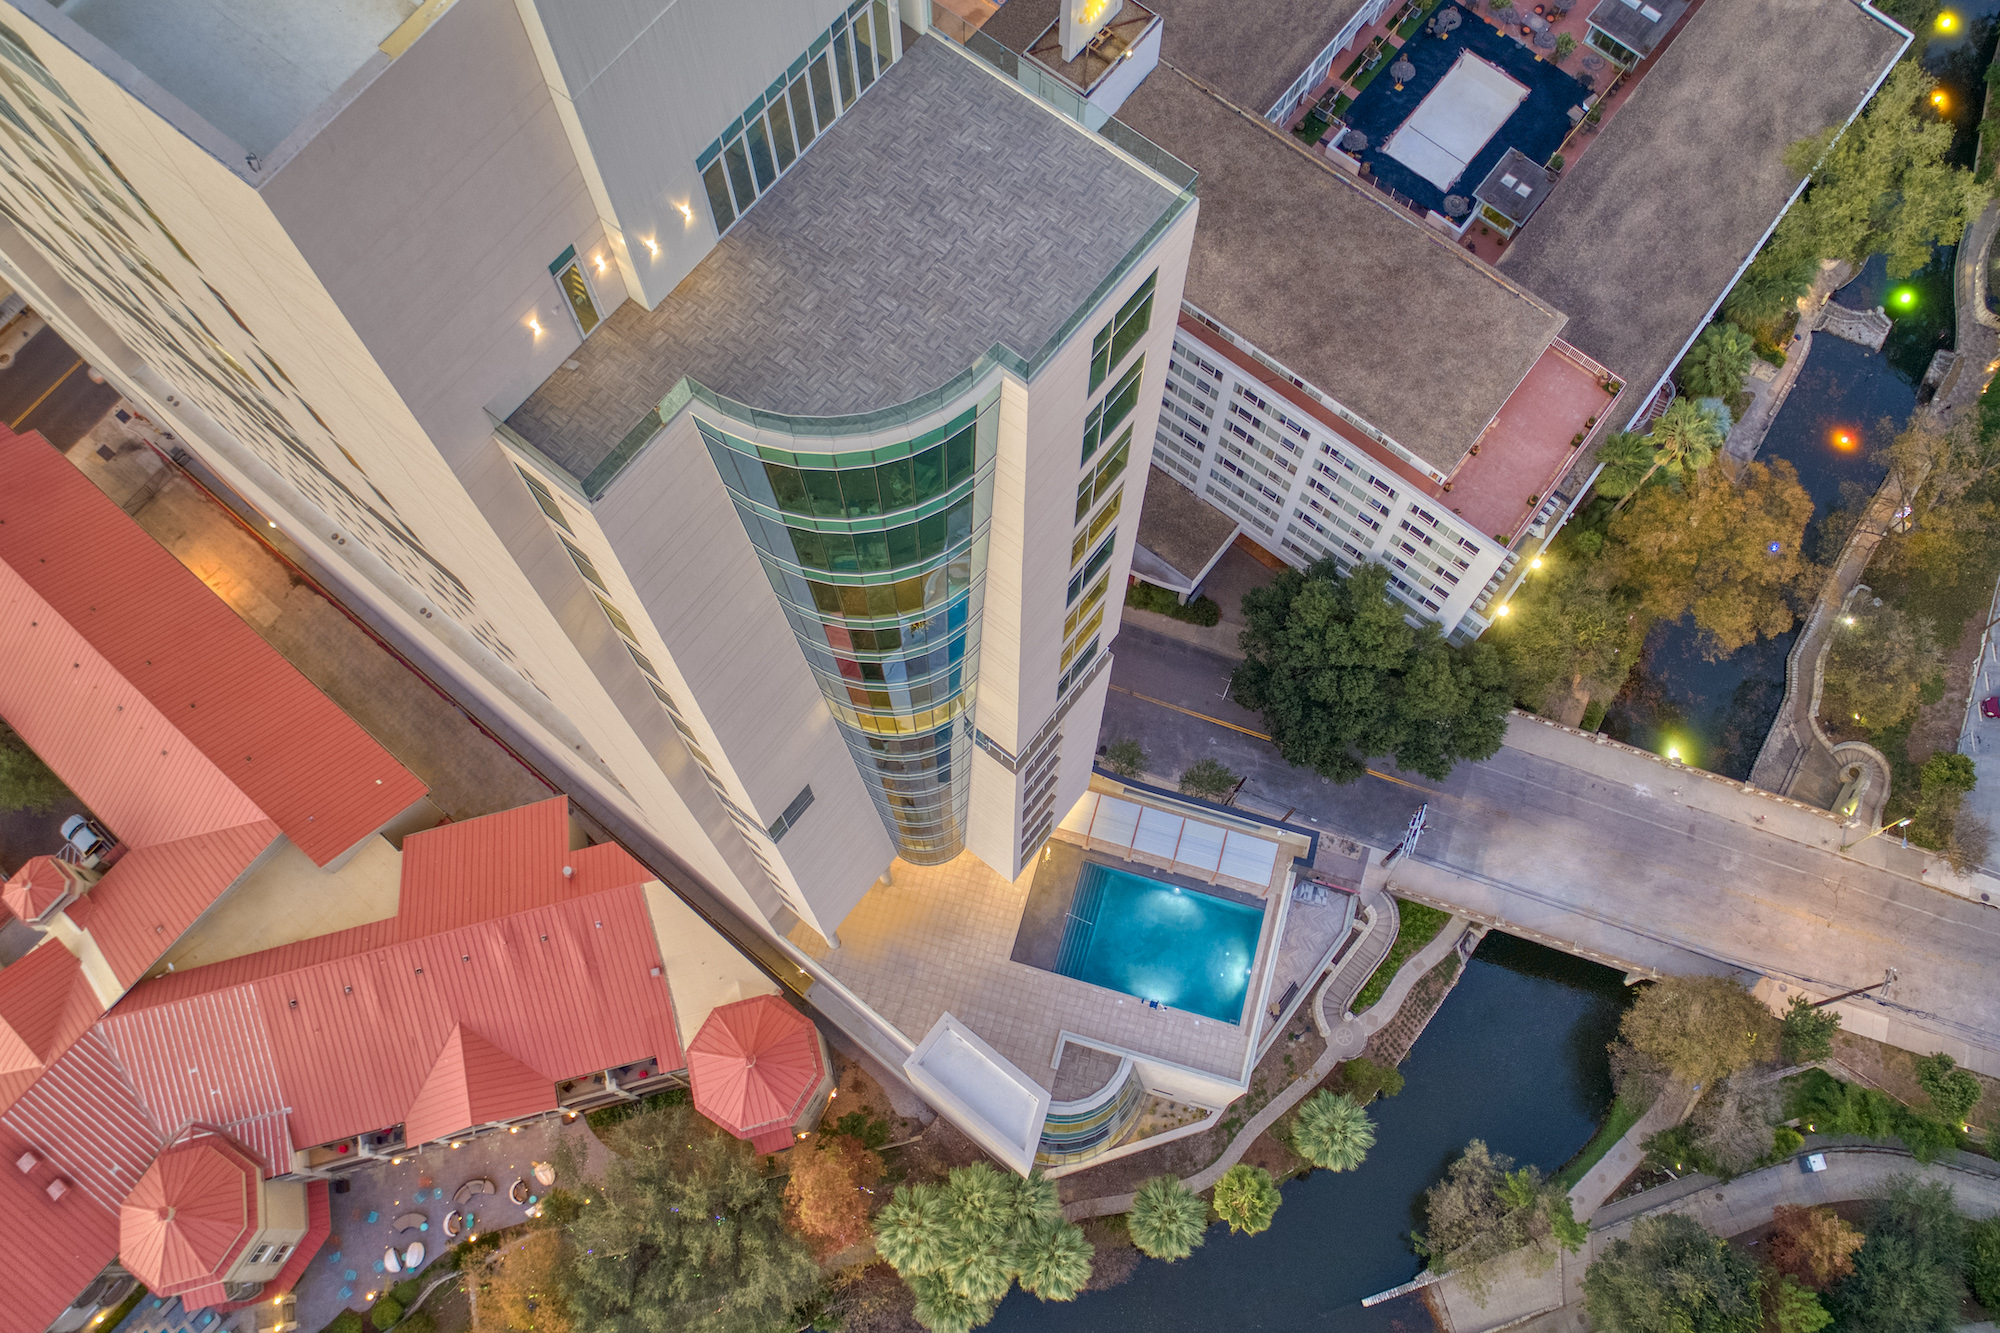 5 Reasons To Book The Stylish New Thompson San Antonio Hotel